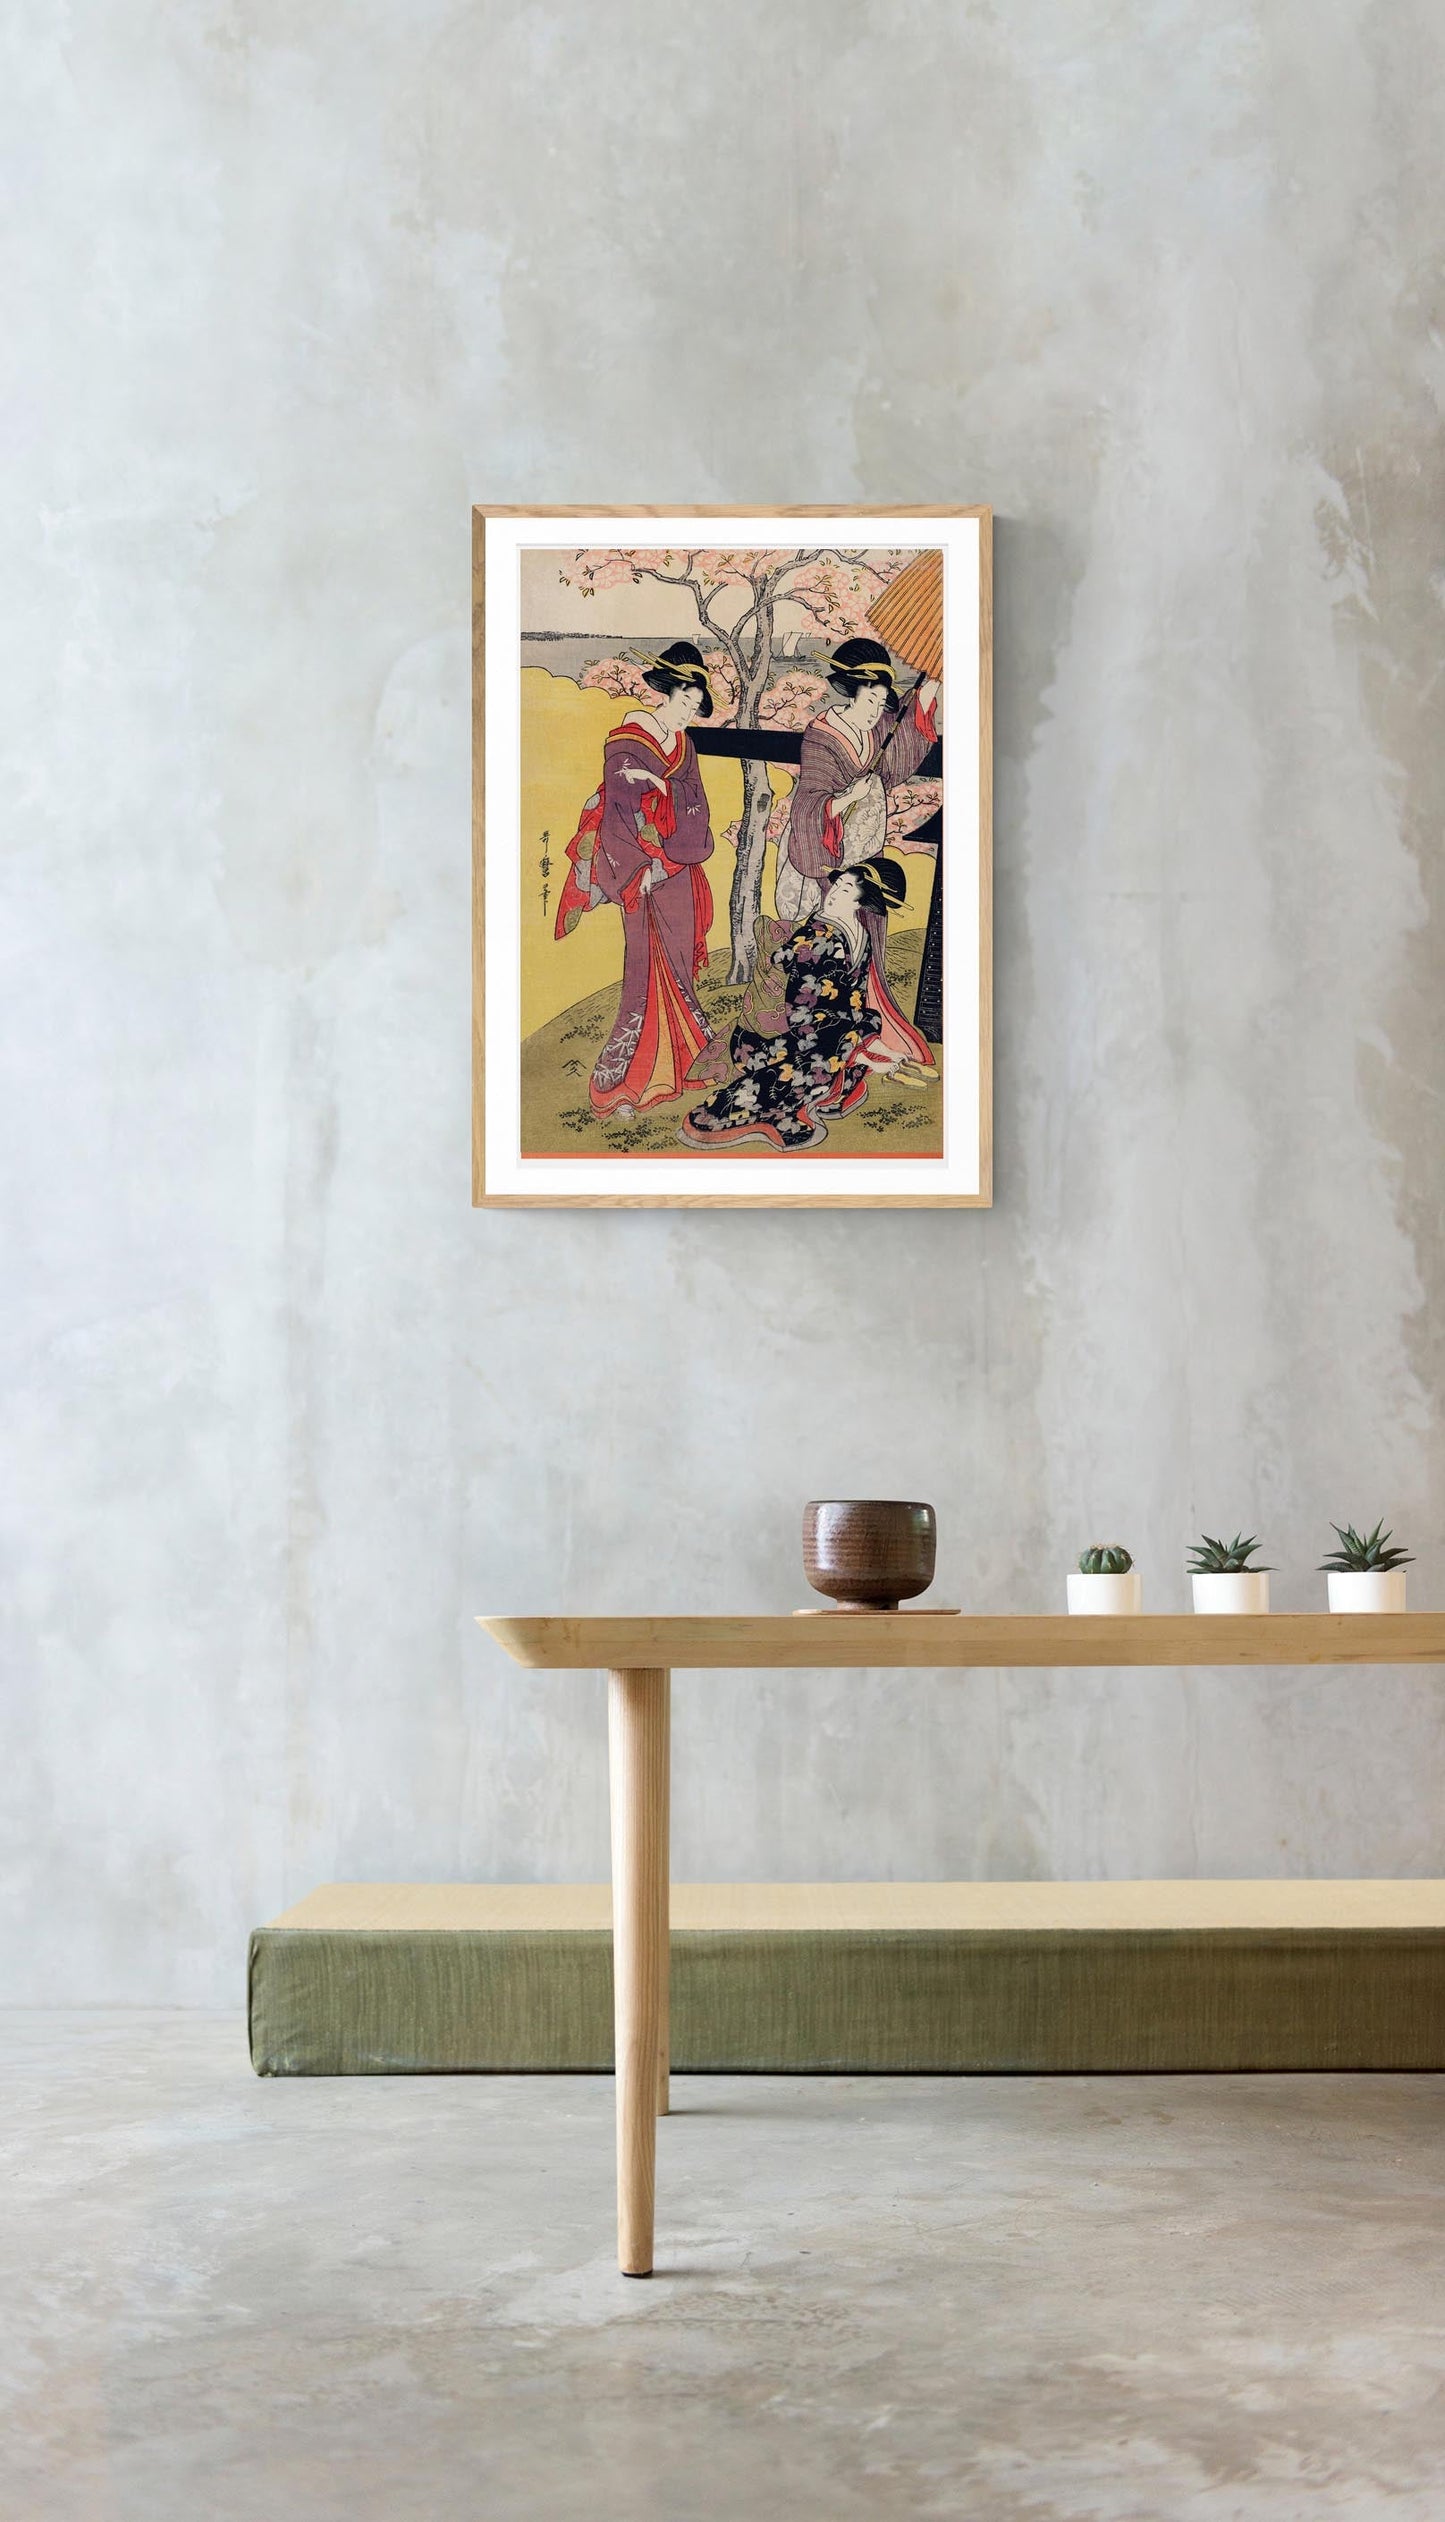 Gotenyama no Hanami Hidari (3 Geishas at Cherry Blossom Garden) by Utamaro Kitagawa